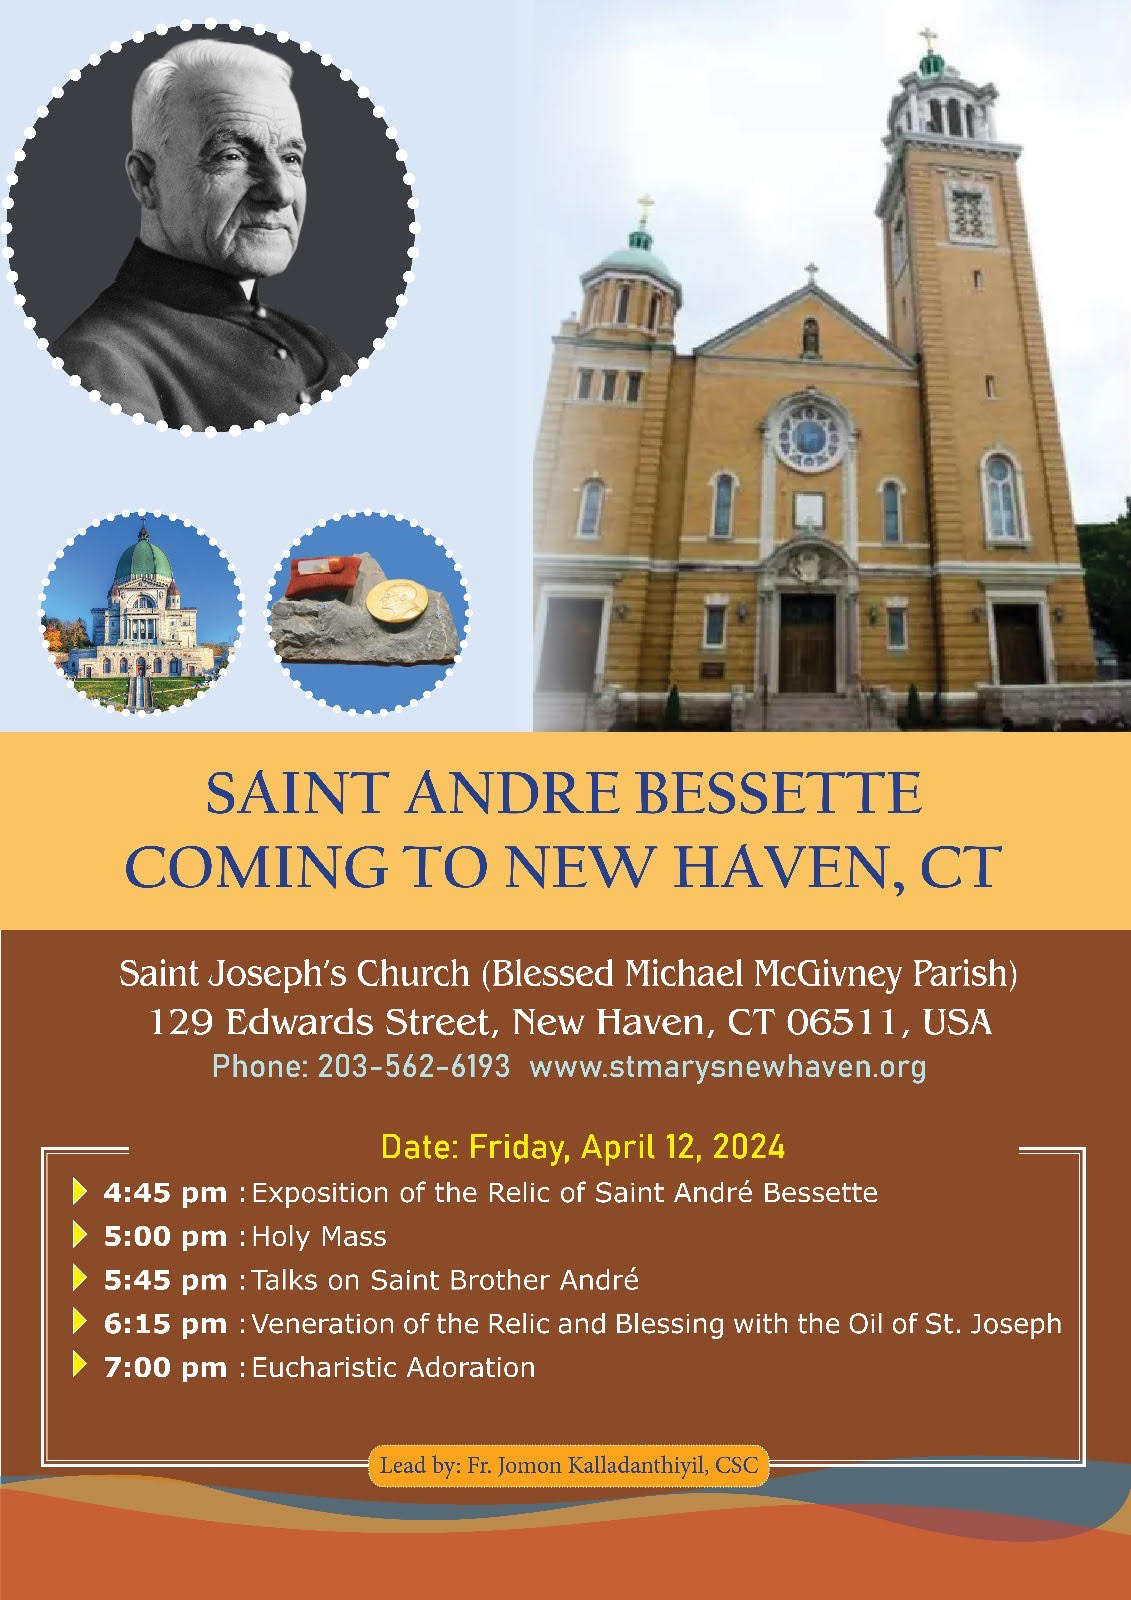 Saint Andre Bessette Pilgrimage